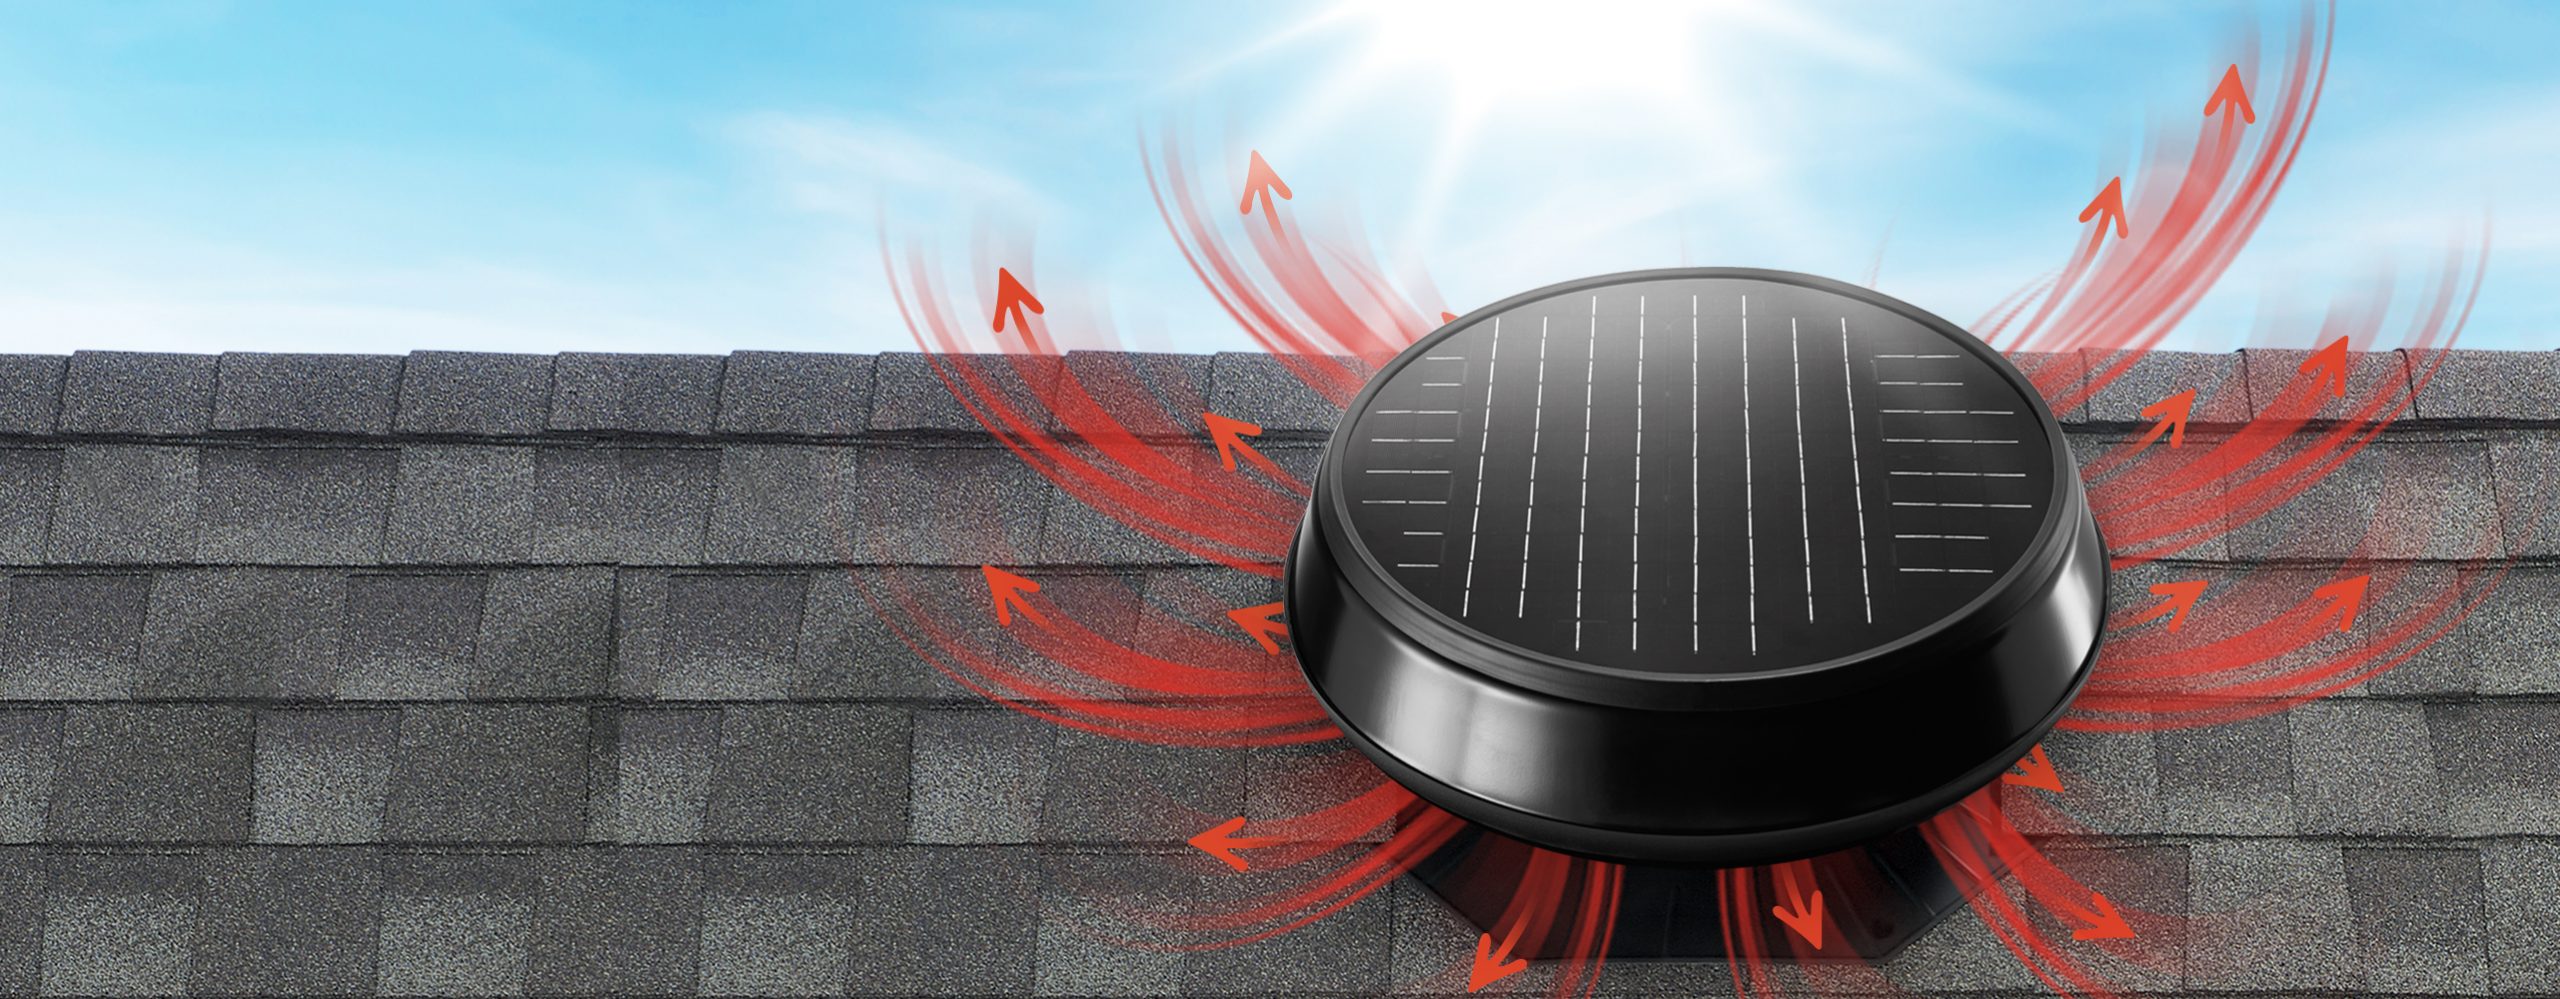 Solar Roof Ventilator/ Solar Attic Ventilator - Green-Vent Solar